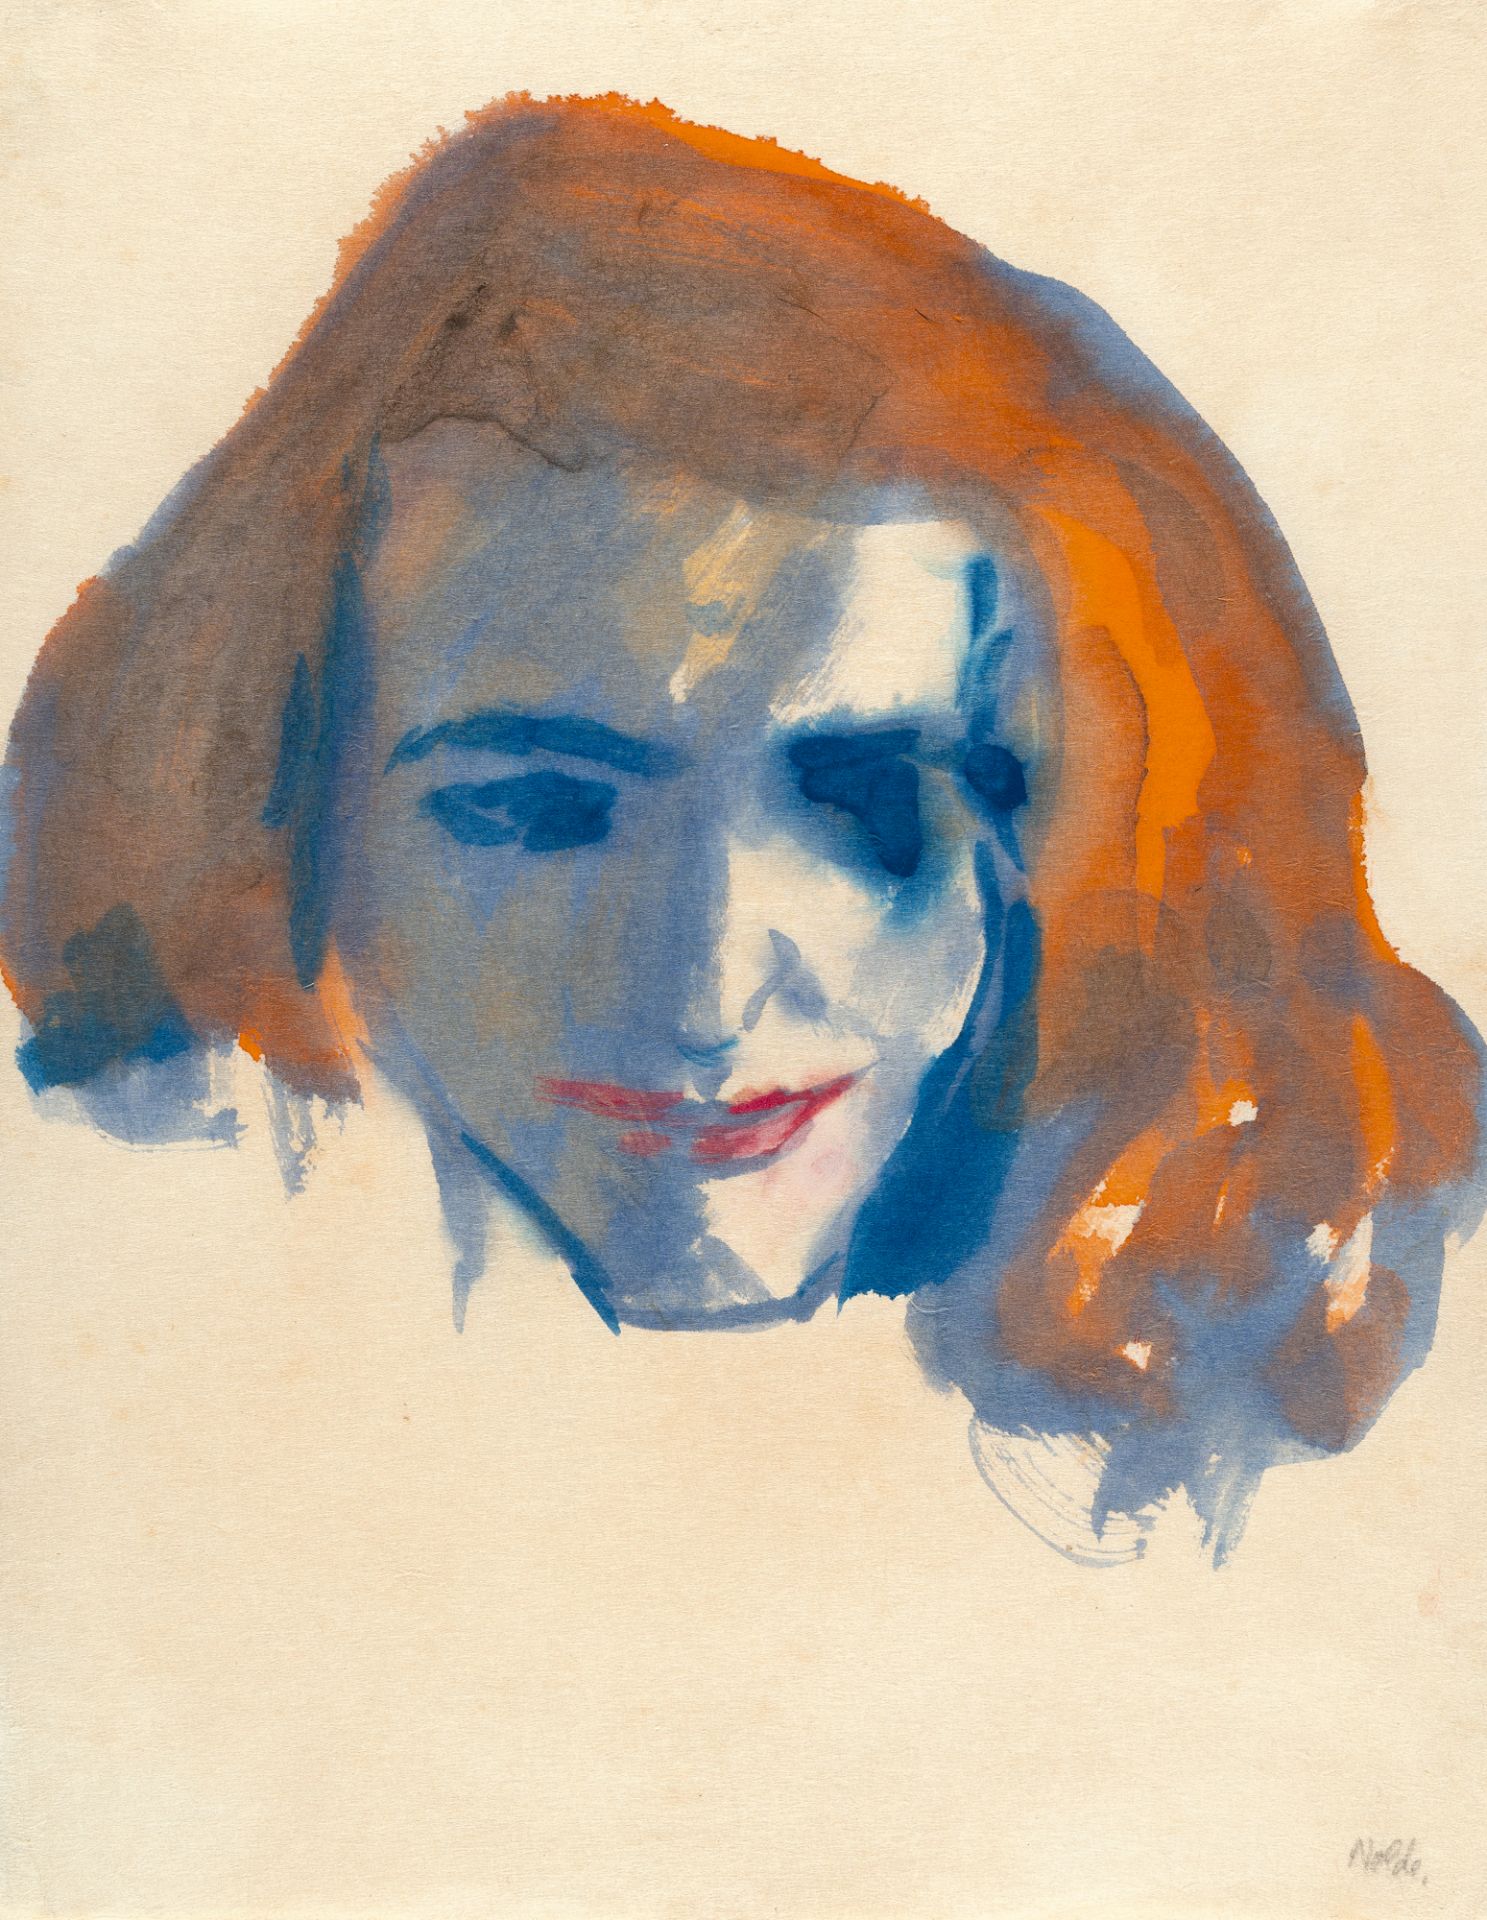 Emil Nolde (1867 Nolde - Seebüll 1956) – Redhead (Stephanie Wiesand).Watercolour on Japon. (1947).